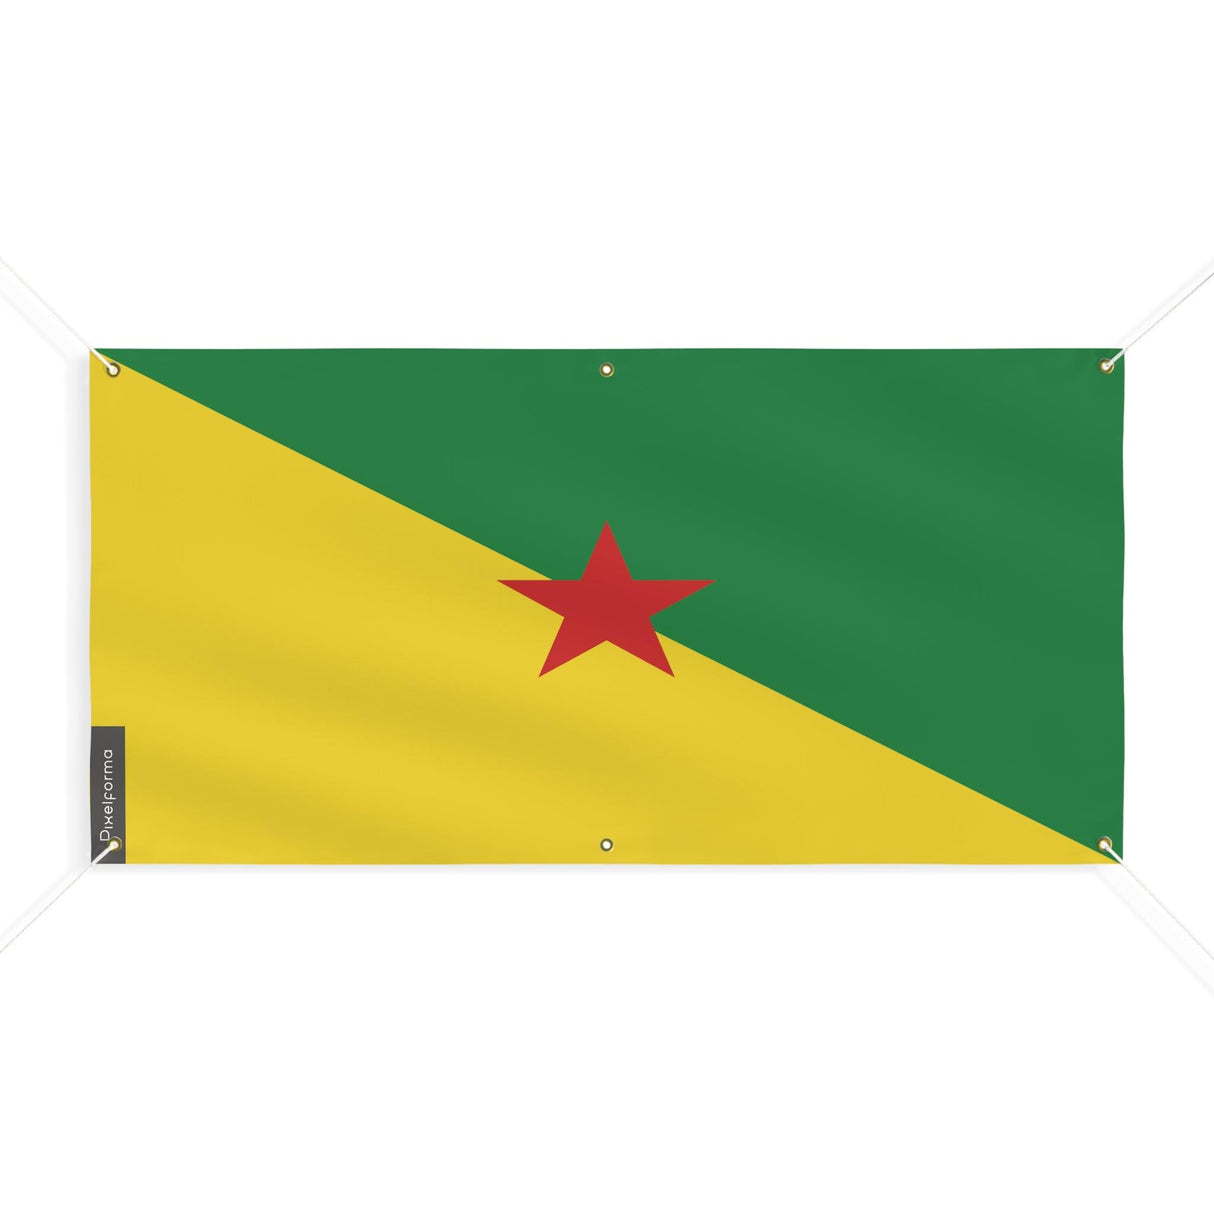 Drapeau de la Guyane 6 Oeillets en plusieurs tailles - Pixelforma 